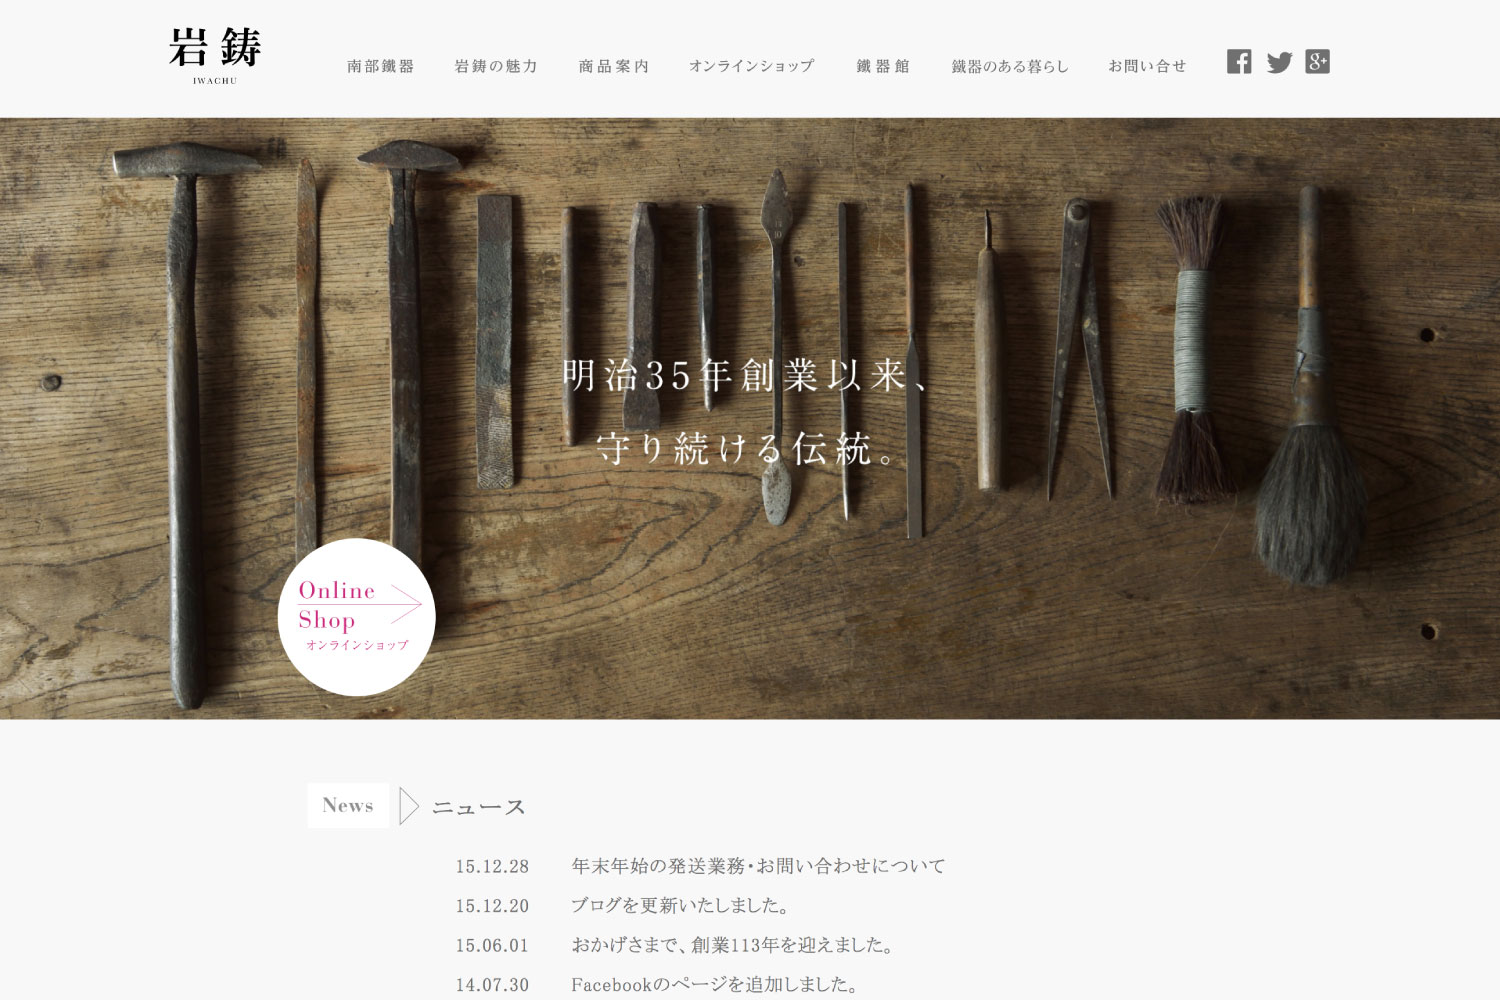 IWACHU Web site (top page)